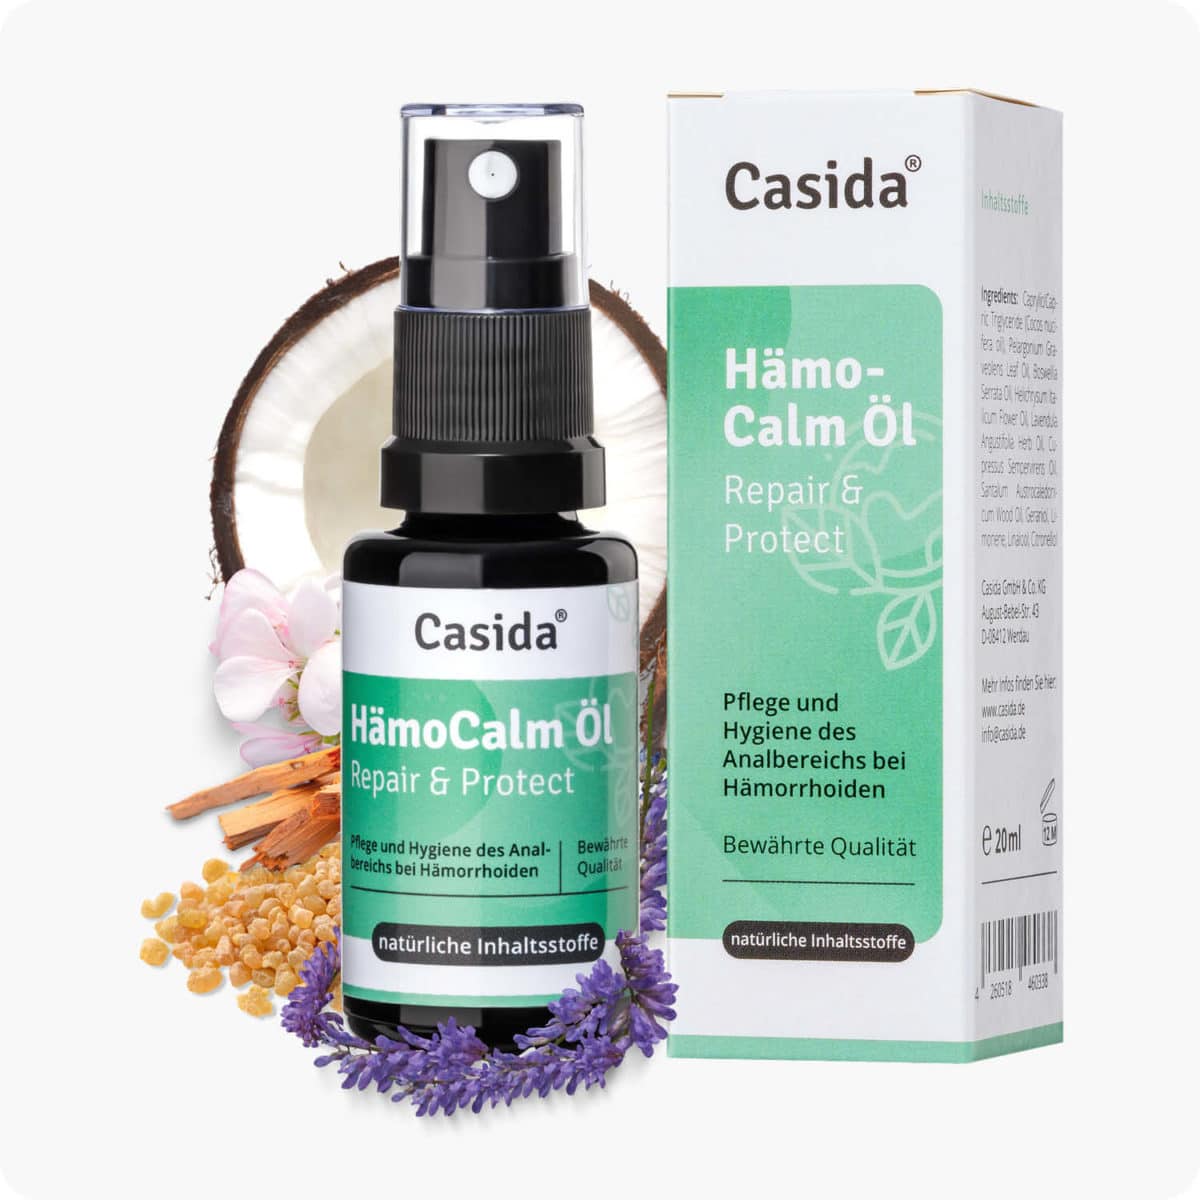 Casida HemoCalm Oil Repair & Protect – 20 ml 10086675 PZN Apotheke hämorrhoiden hämmoritten hemoriden